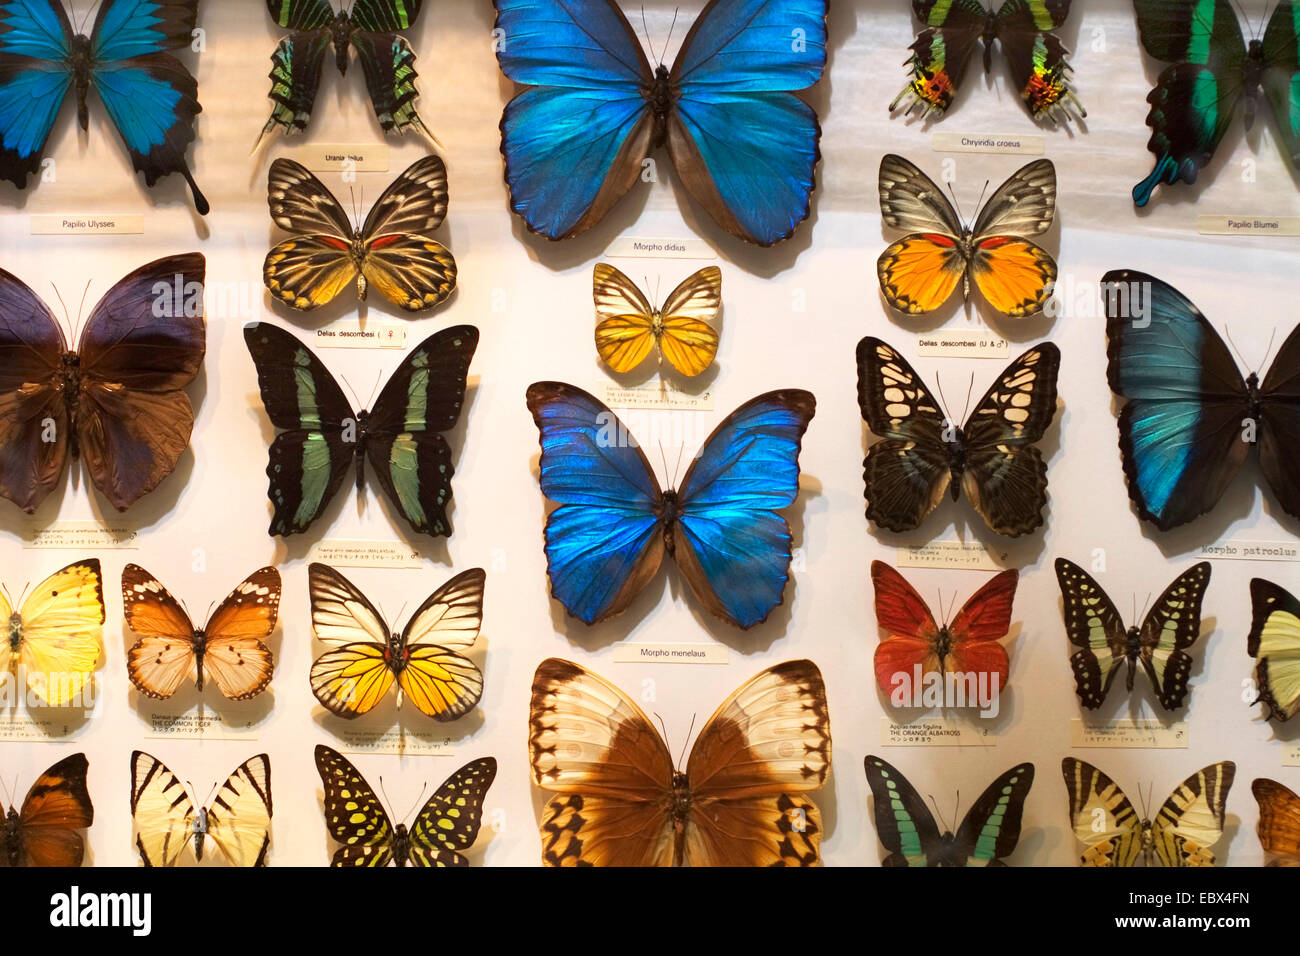 butterflies for sale, Kuala Lumpur Airport, Malaysia Stock Photo - Alamy